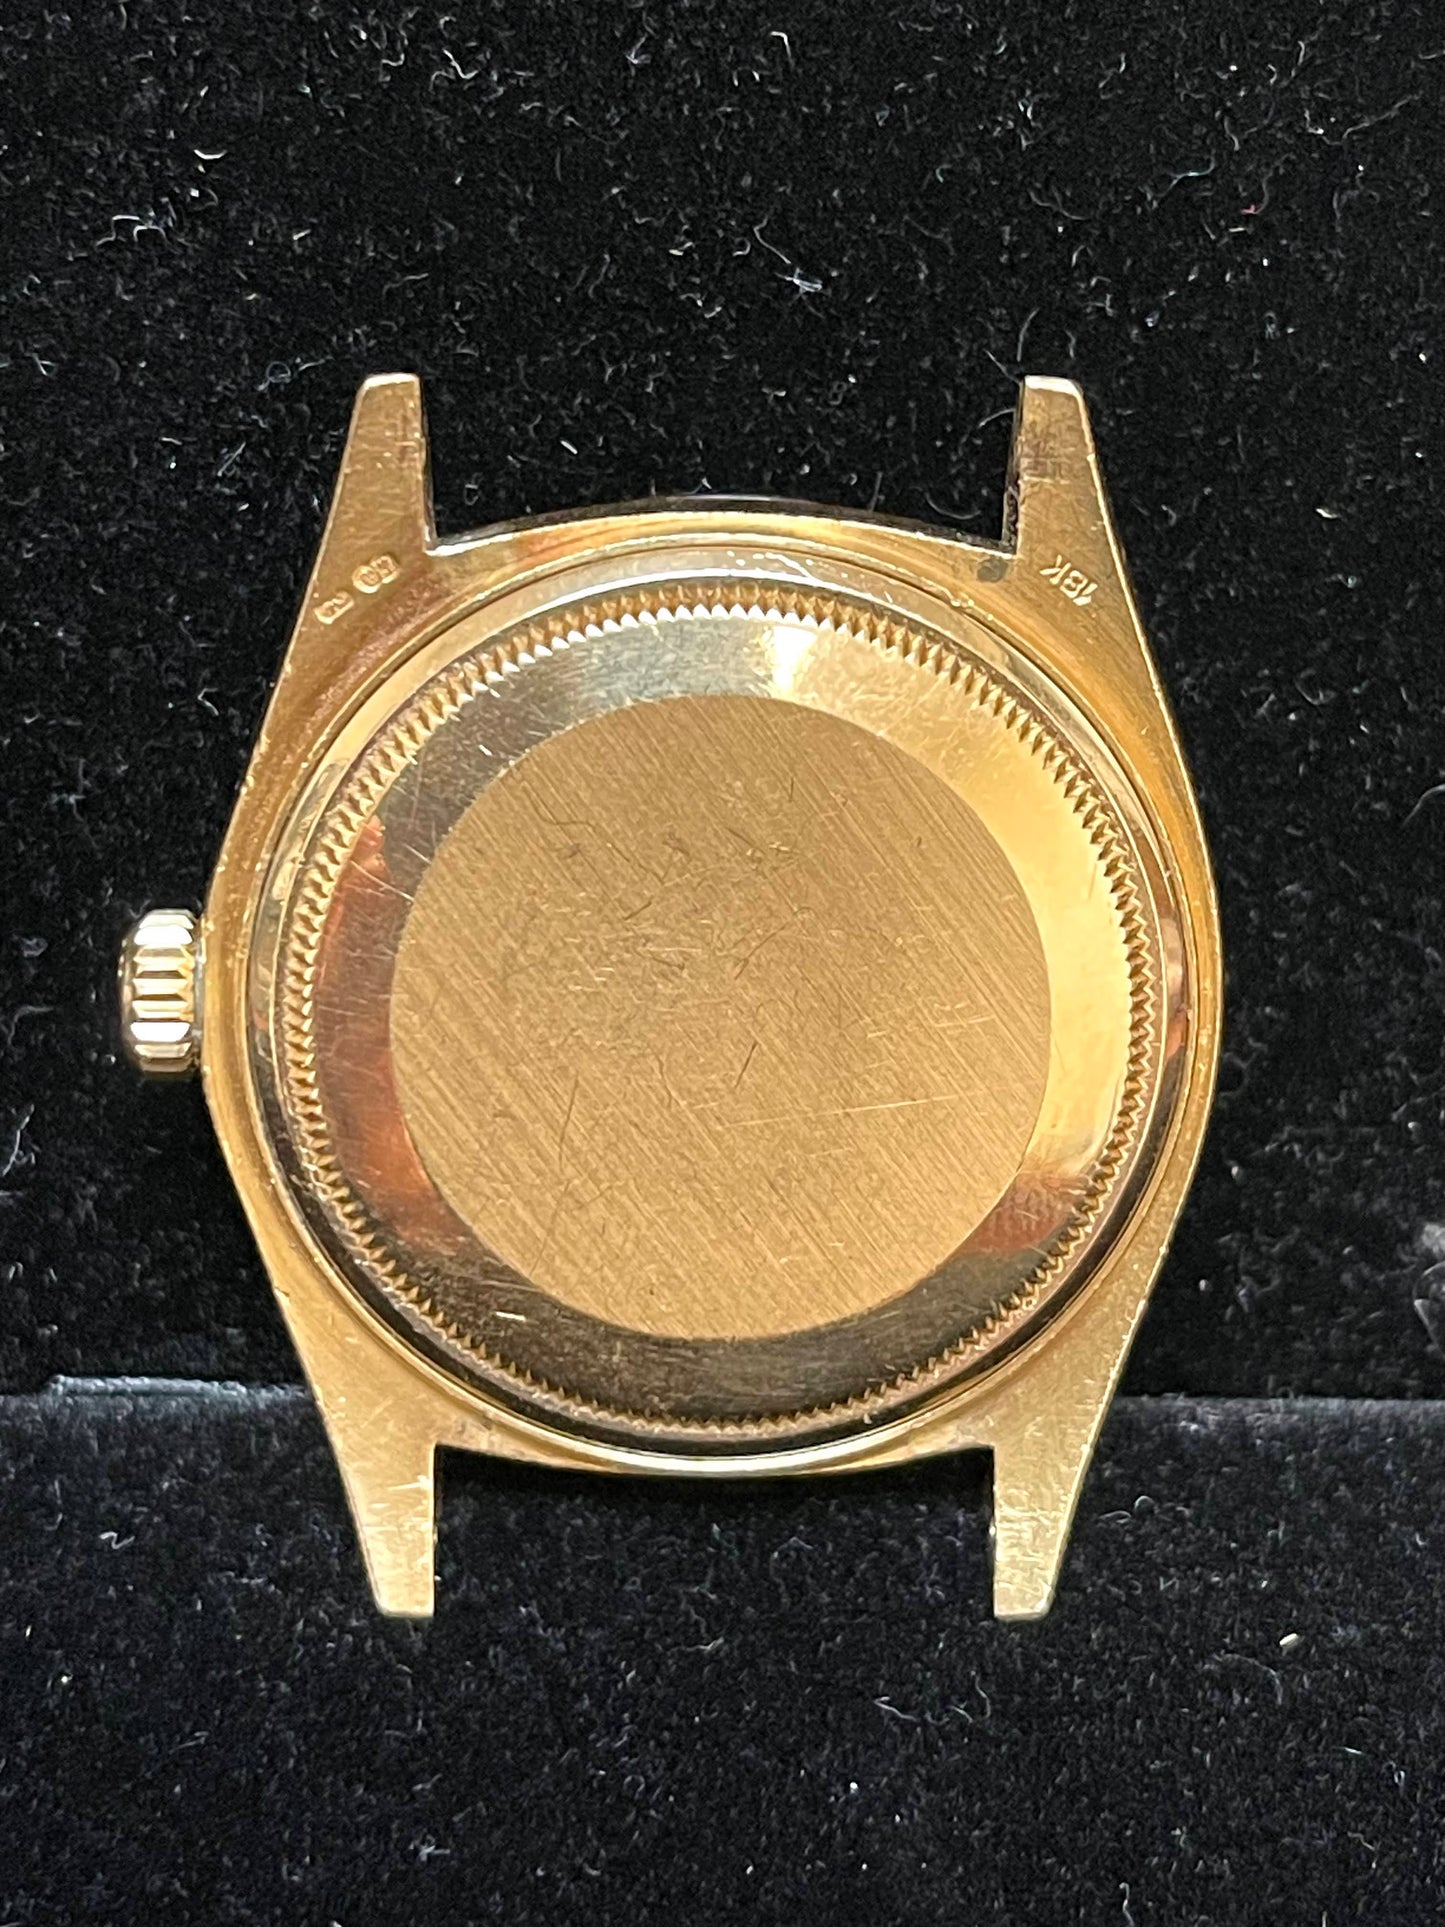 1979 Rolex Day-Date 18038 Champagne Diamond Dial +Bezel Spanish Wheel 36mm